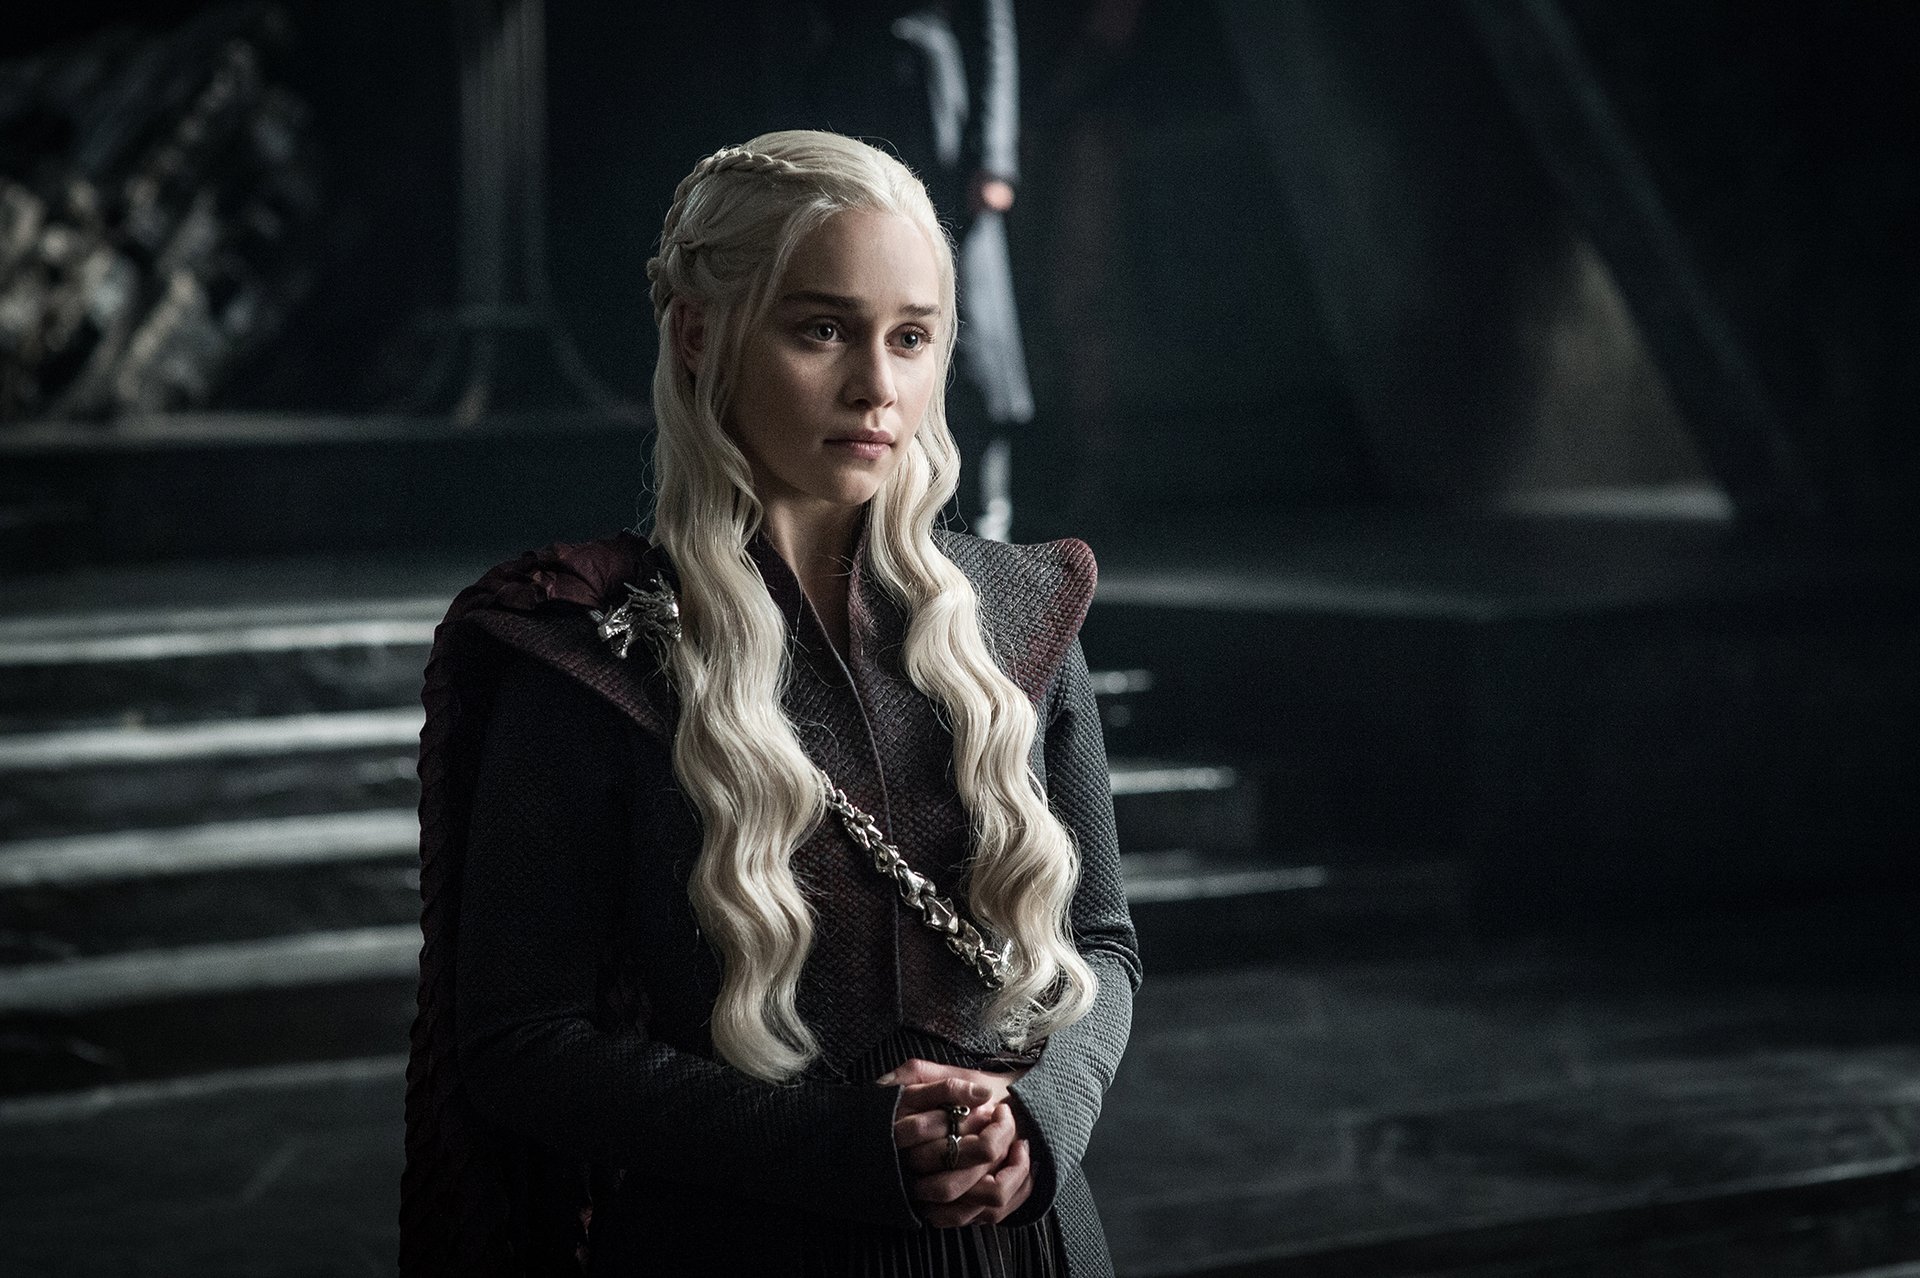 Emilia Clarke Said Jason Momoa Cried More in Their ‘Game of Thrones’ Scenes